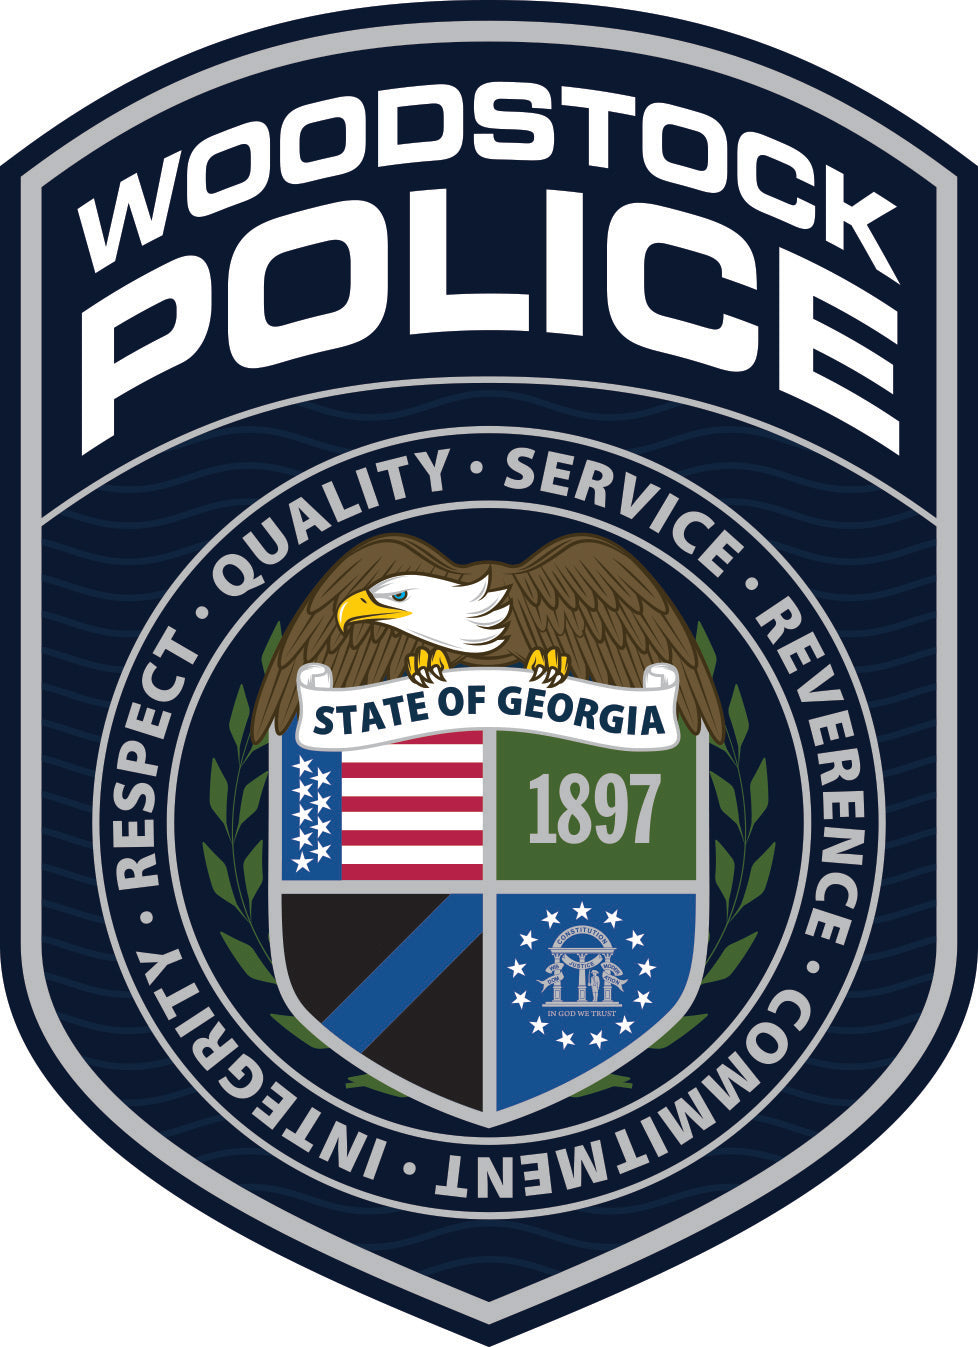 Woodstock Georgia Police Department wooden logo by Patriot Wood